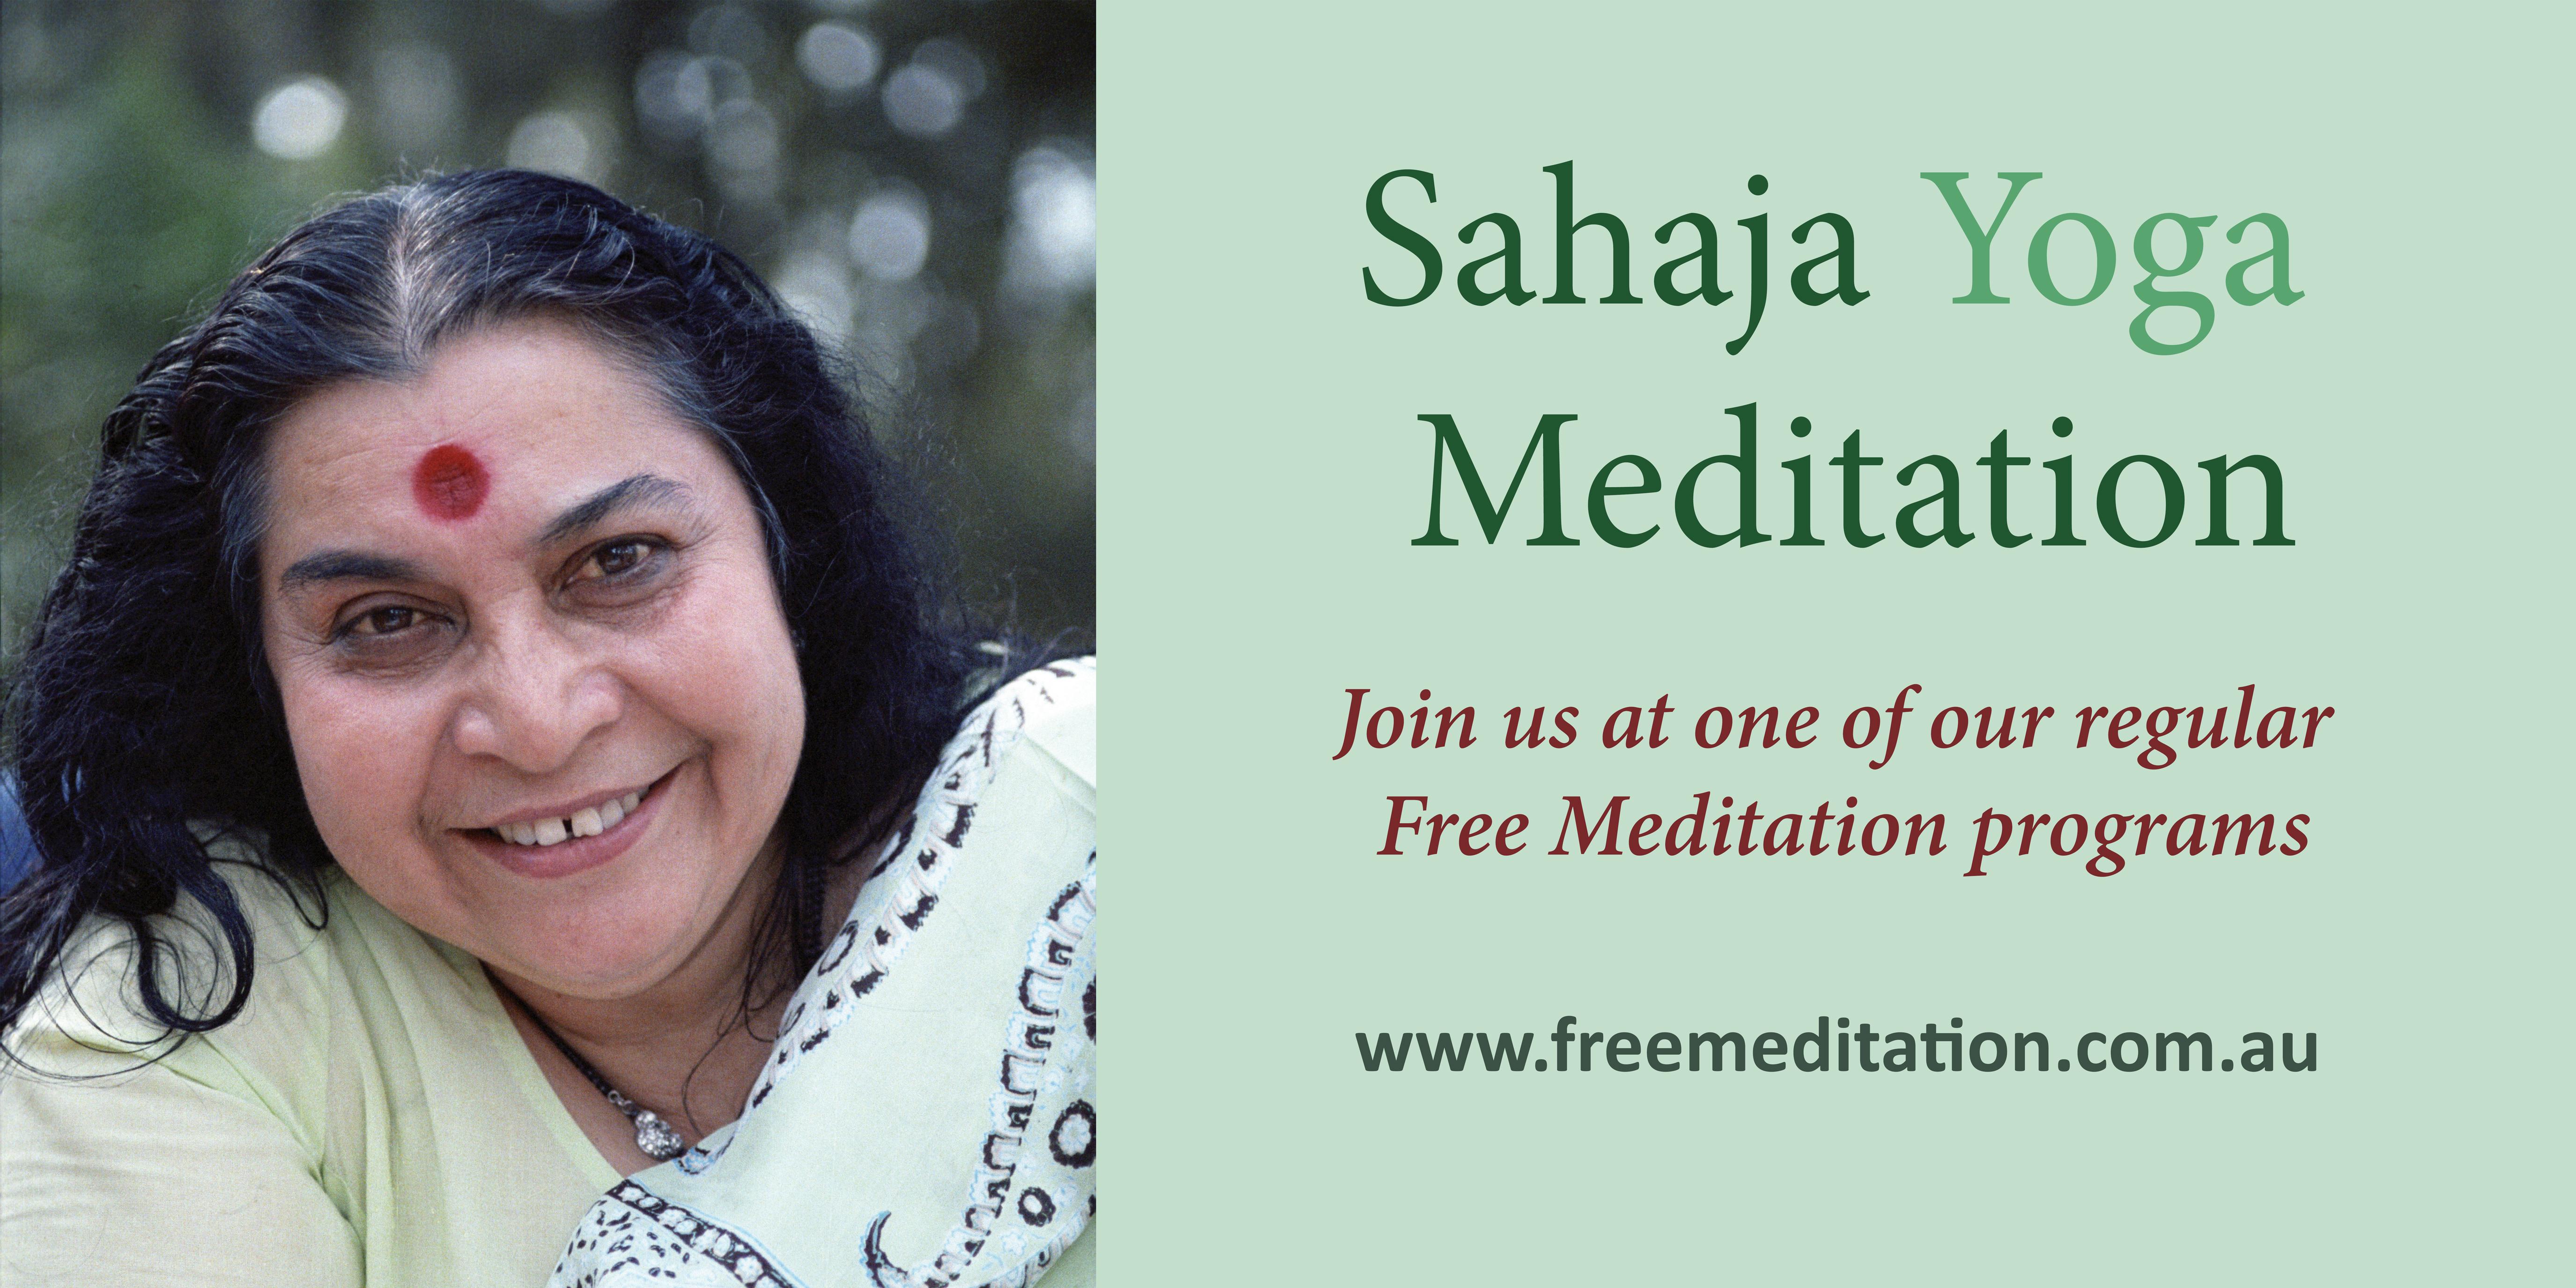 Free Meditation - Sahaja Yoga @ Bassendean Memorial Library